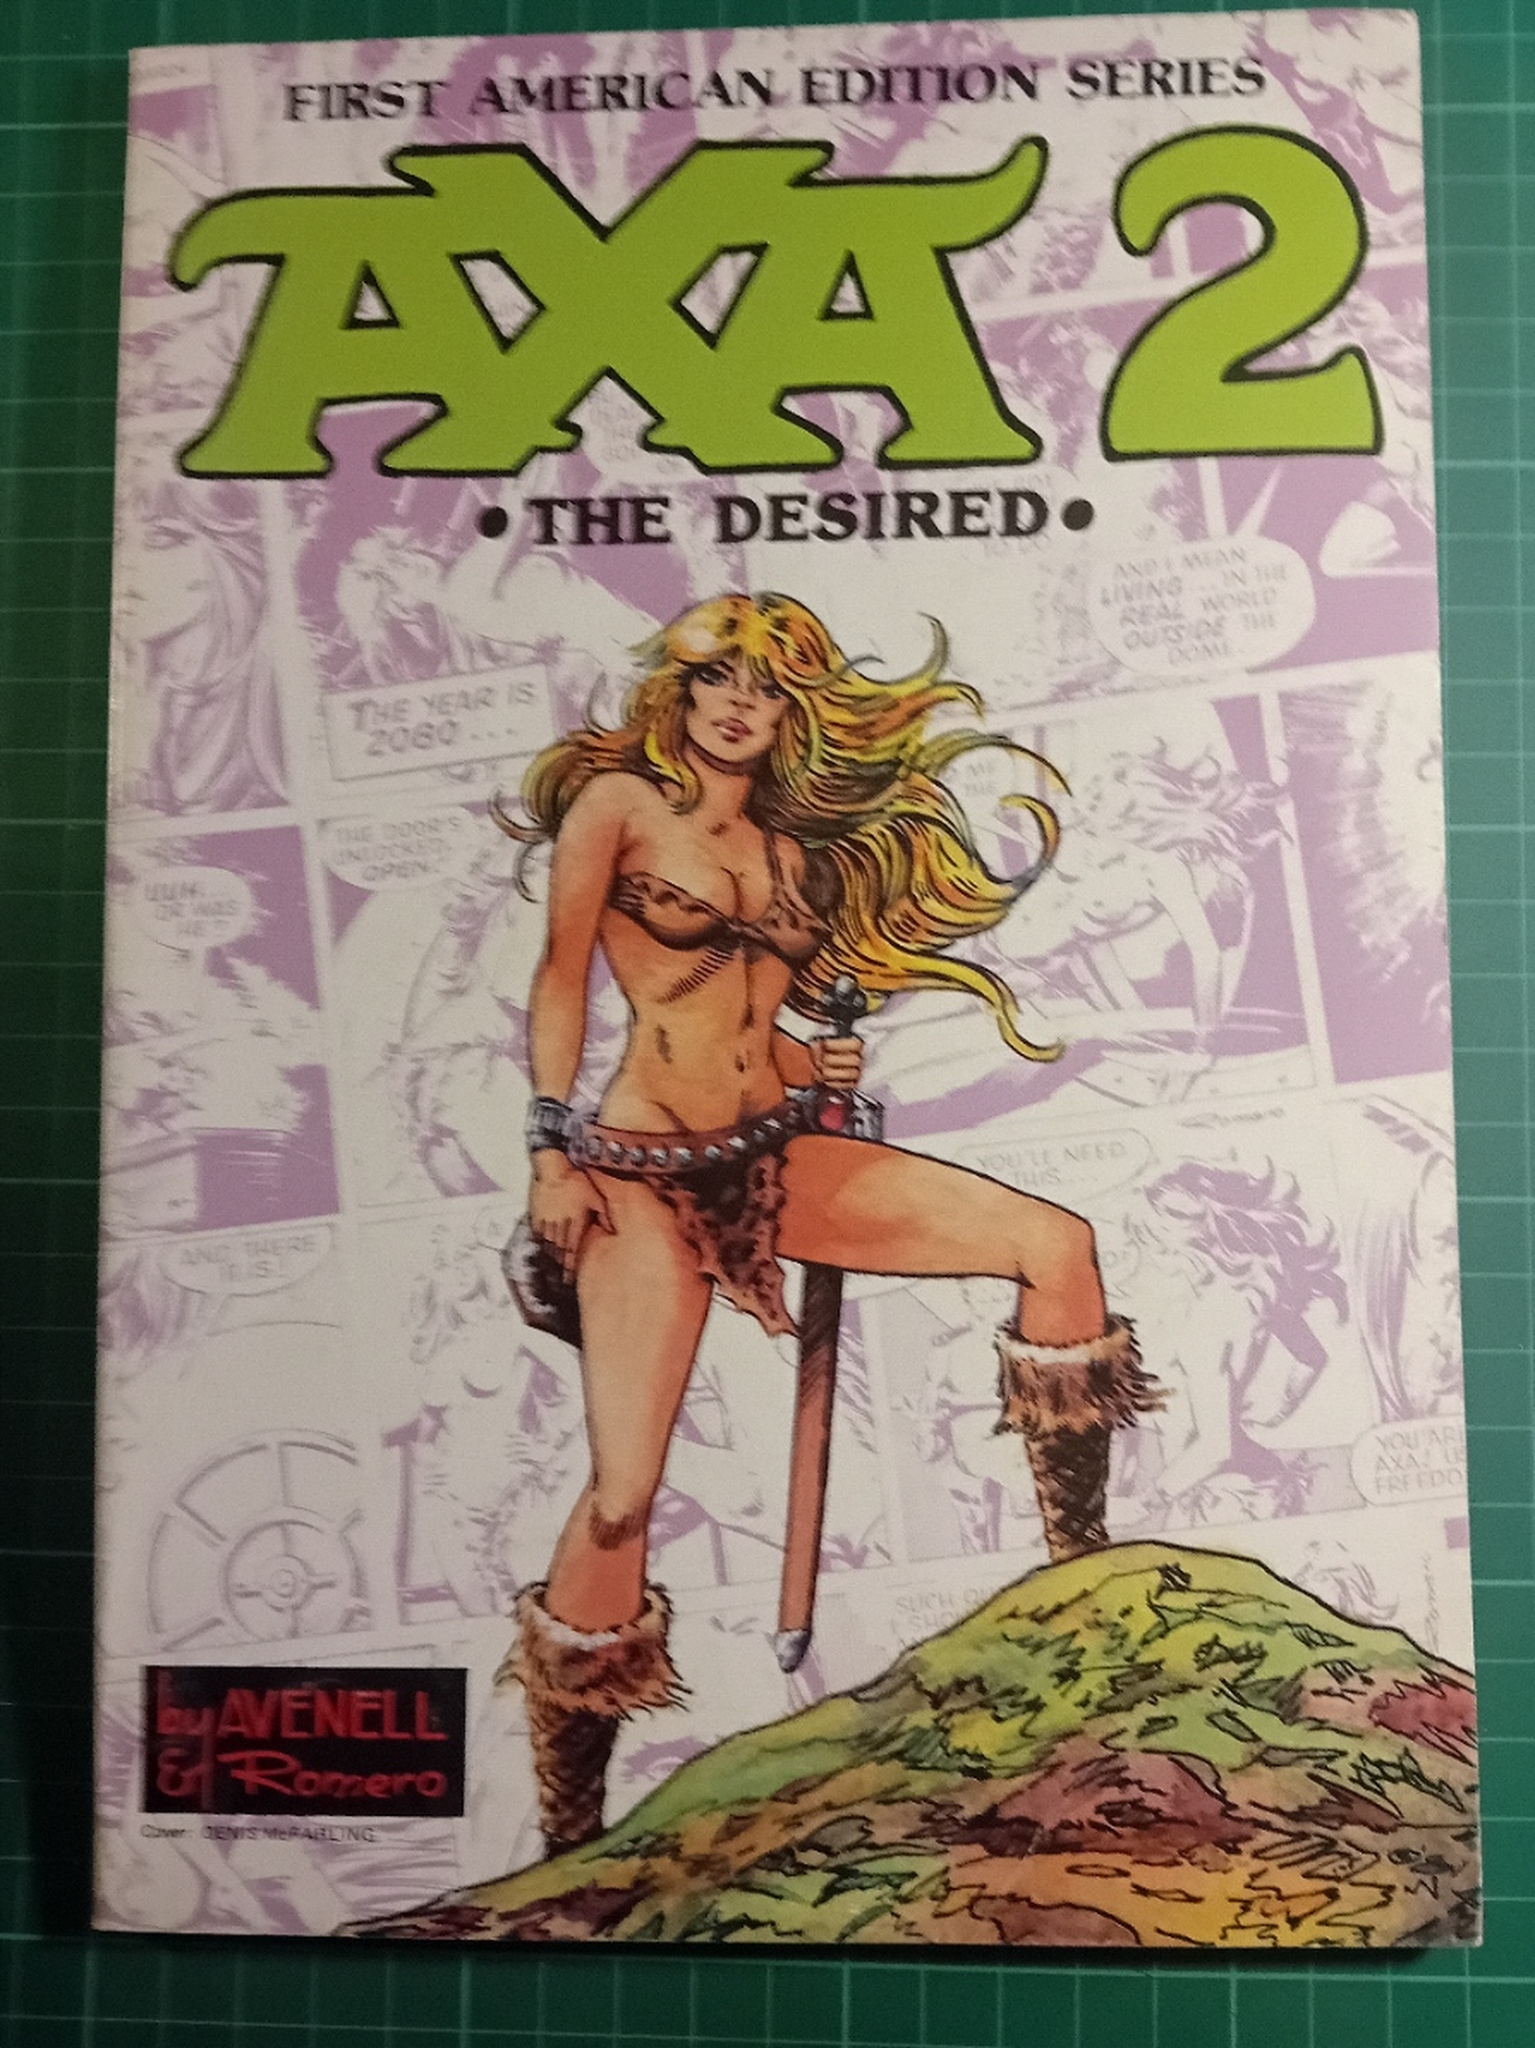 Axa 2 First american edition series